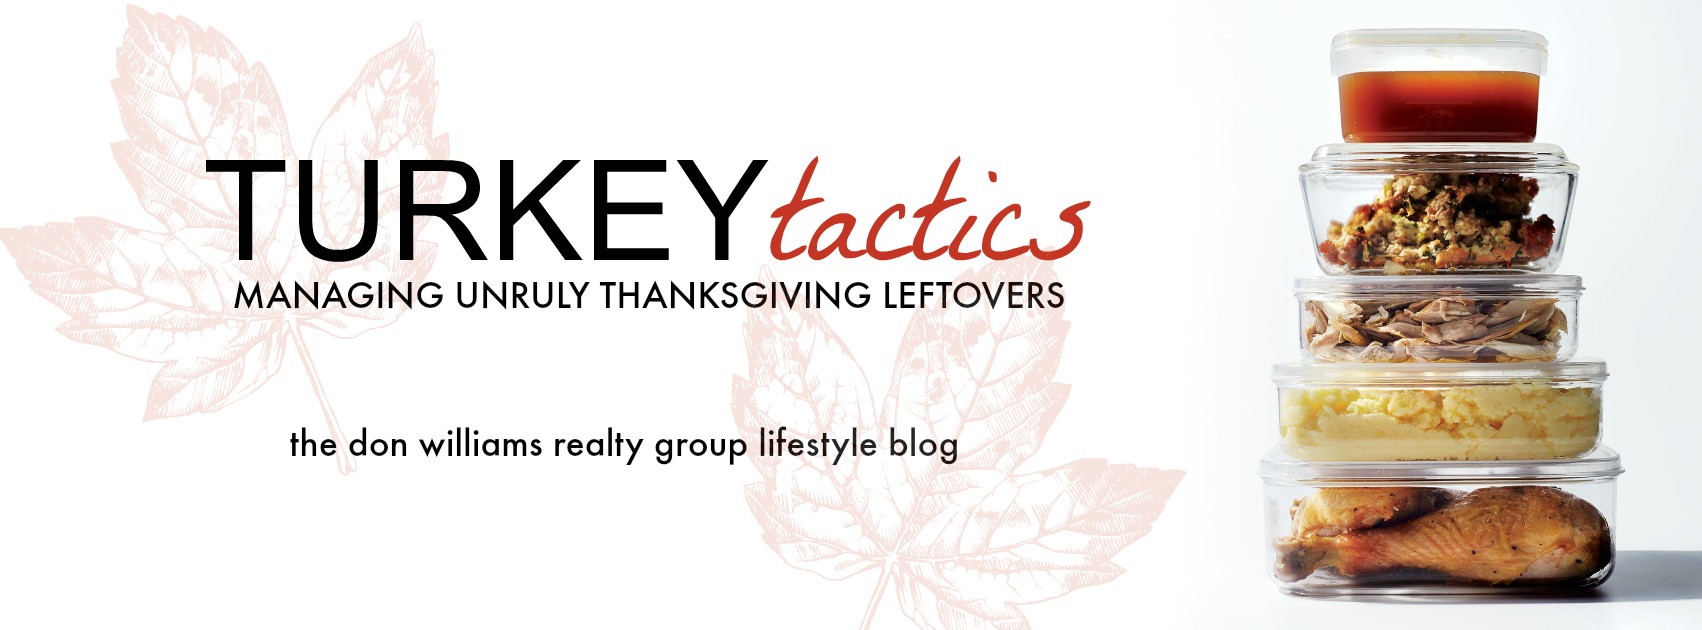 turkey tactics.jpg